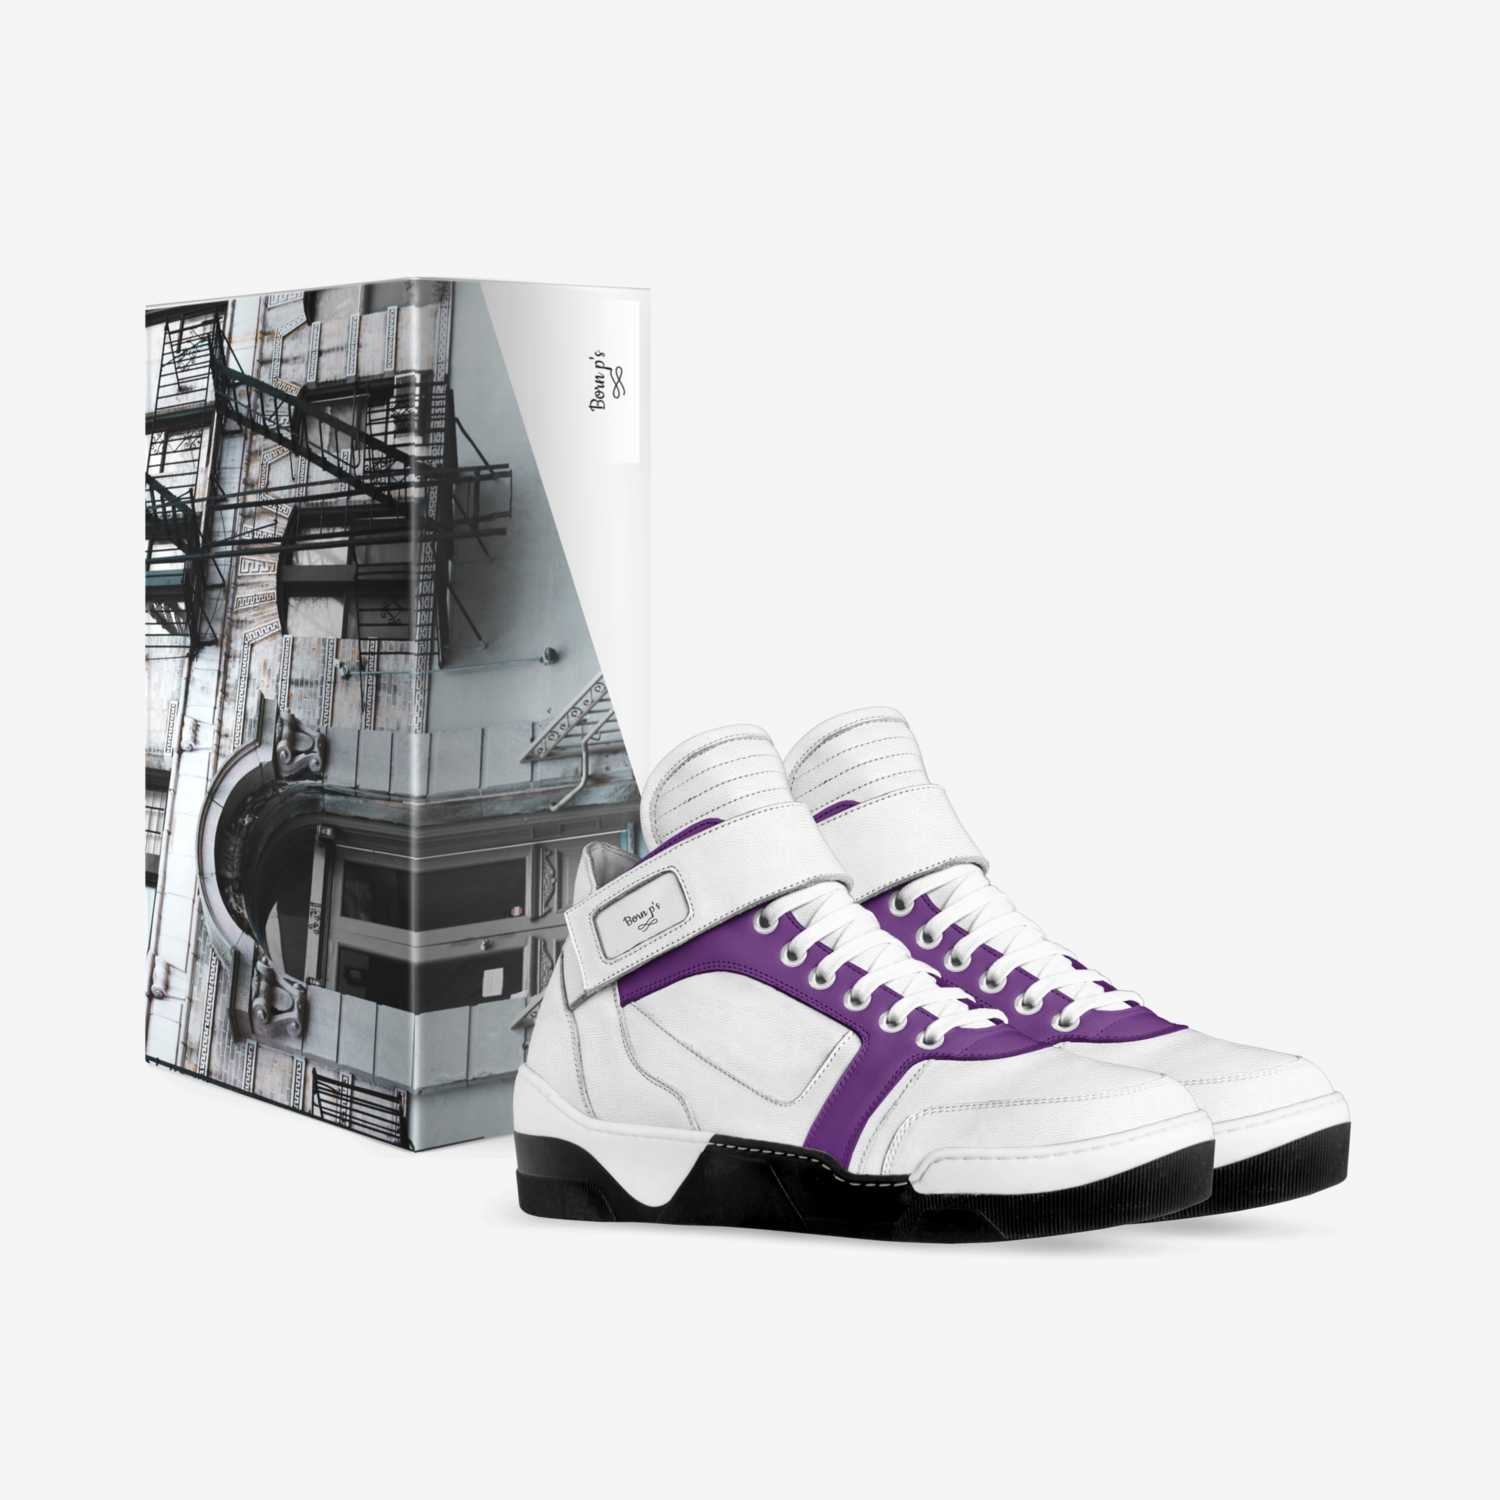 Born p's custom made in Italy shoes by Tiffany Jones | Box view